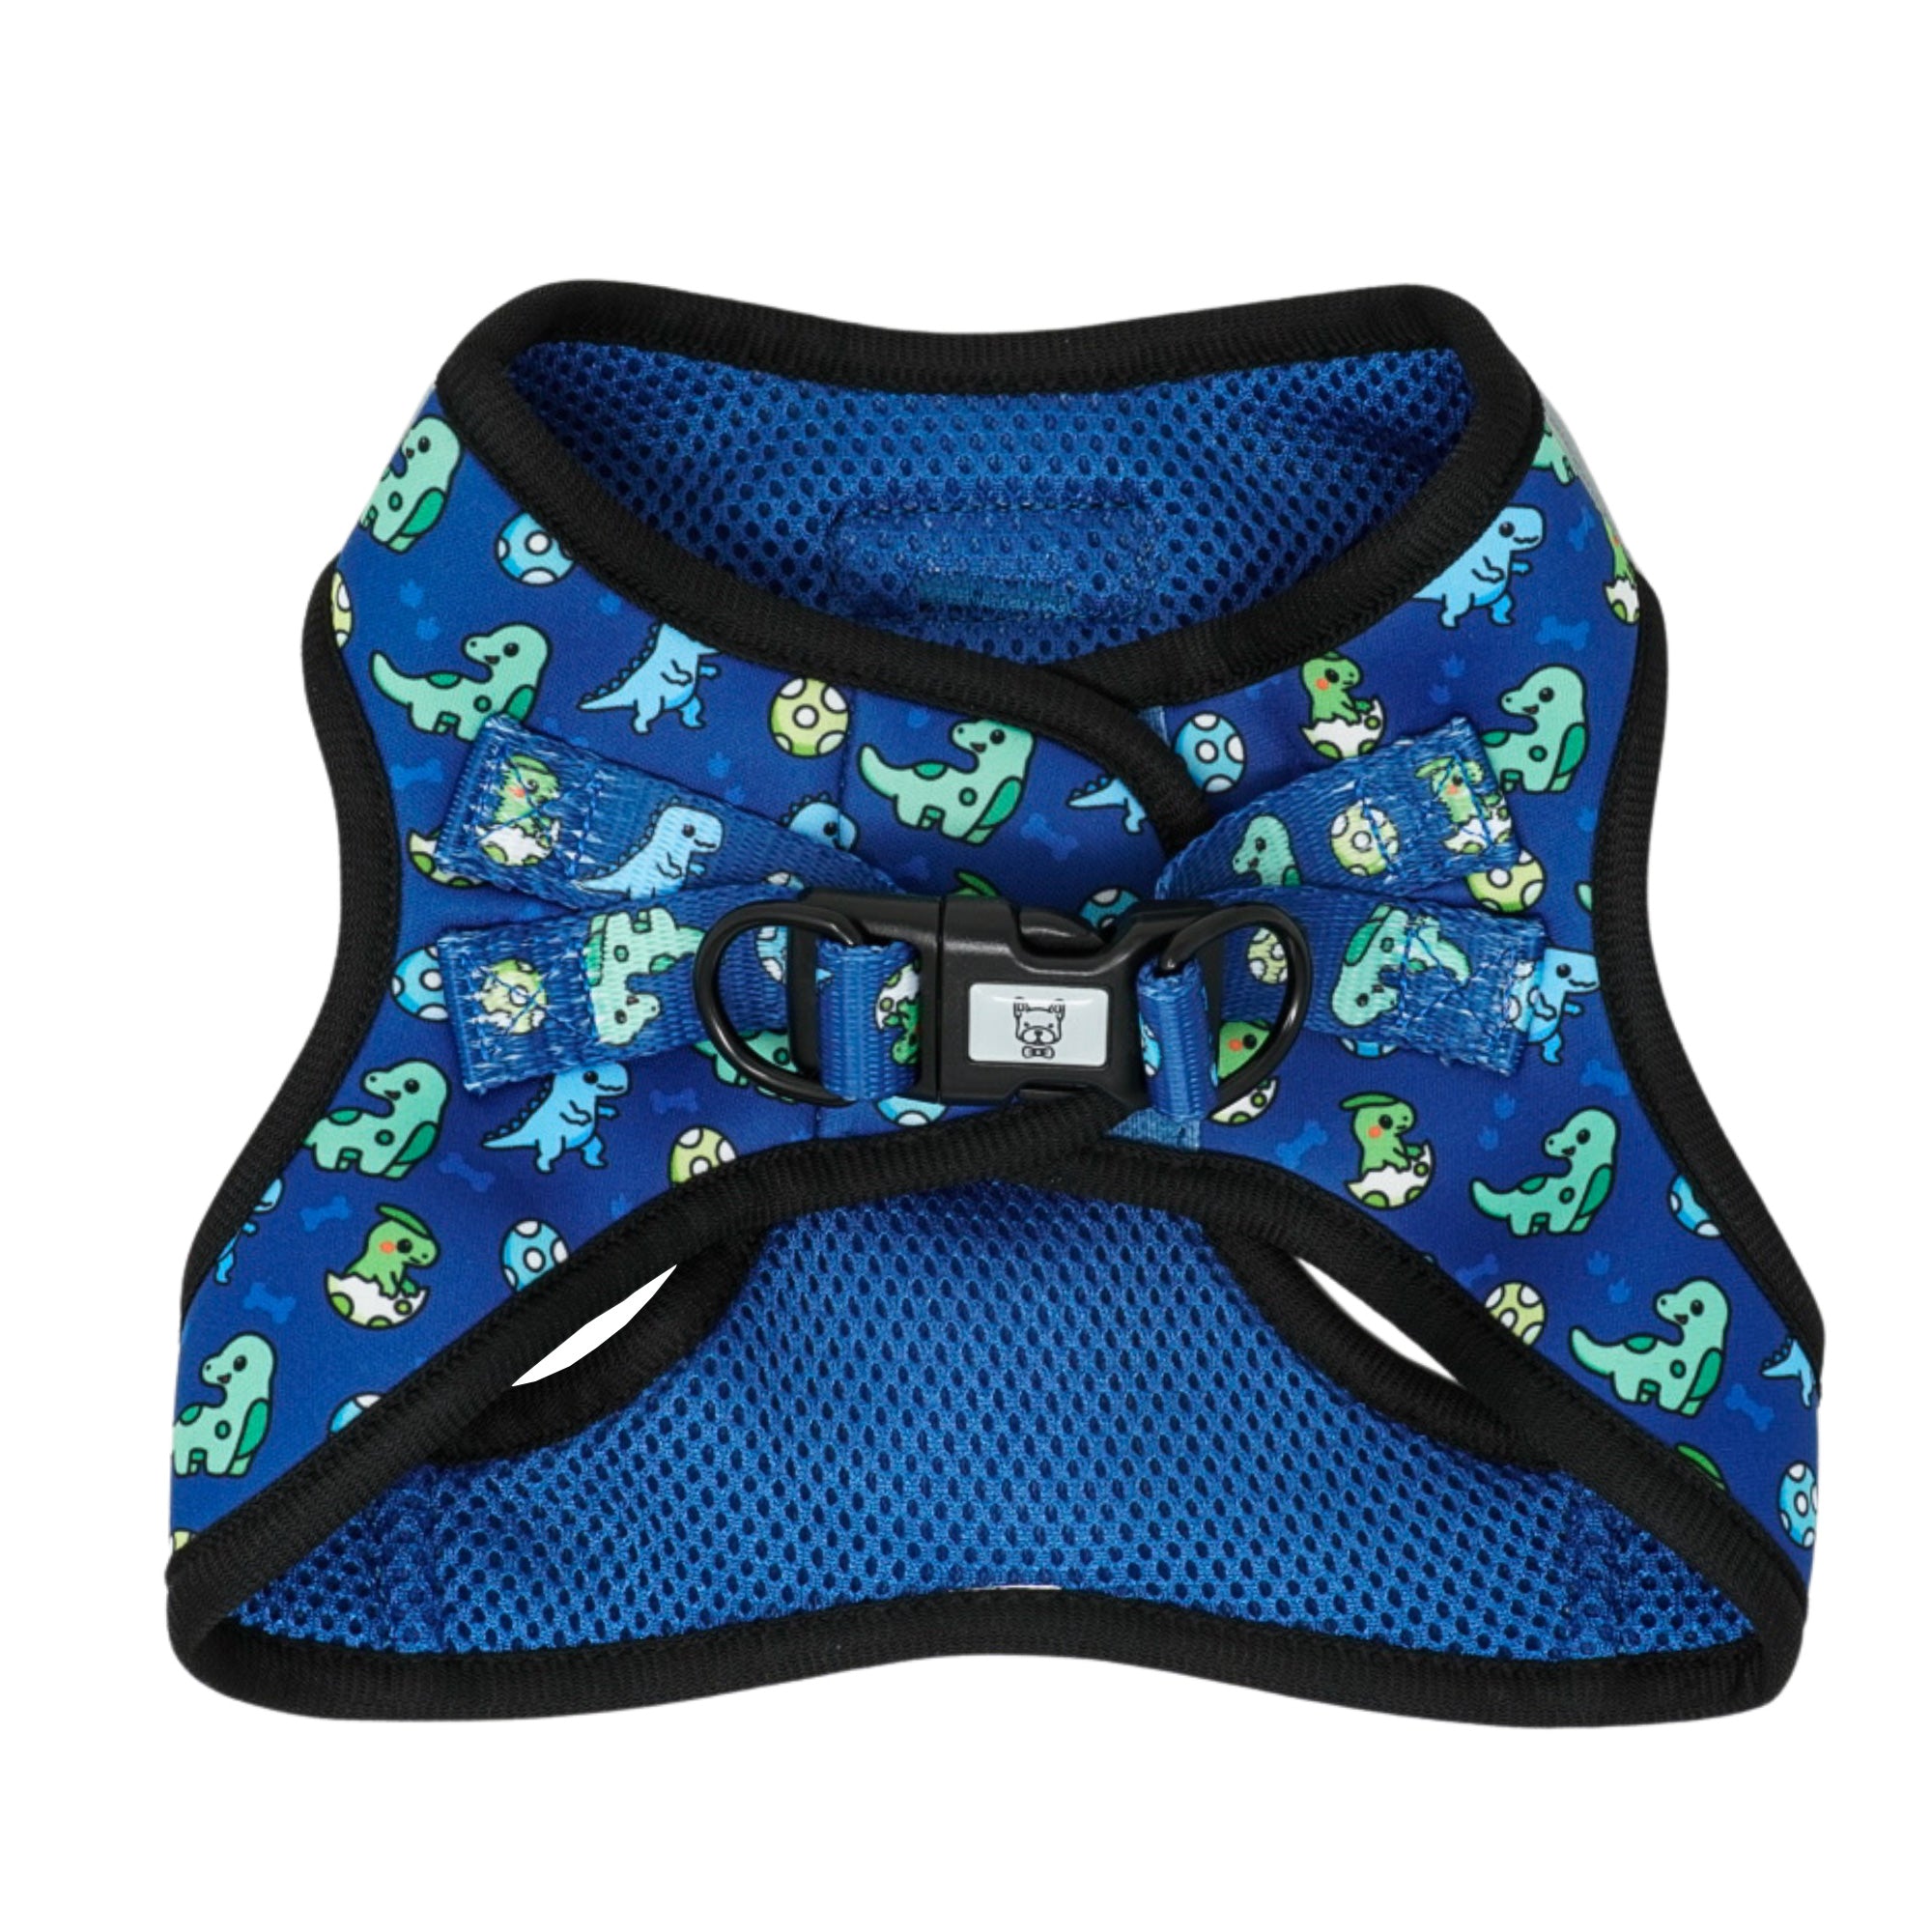 Korriko Pet Supply - Dog Harnesses, Collars, Leashes, Apparel + More